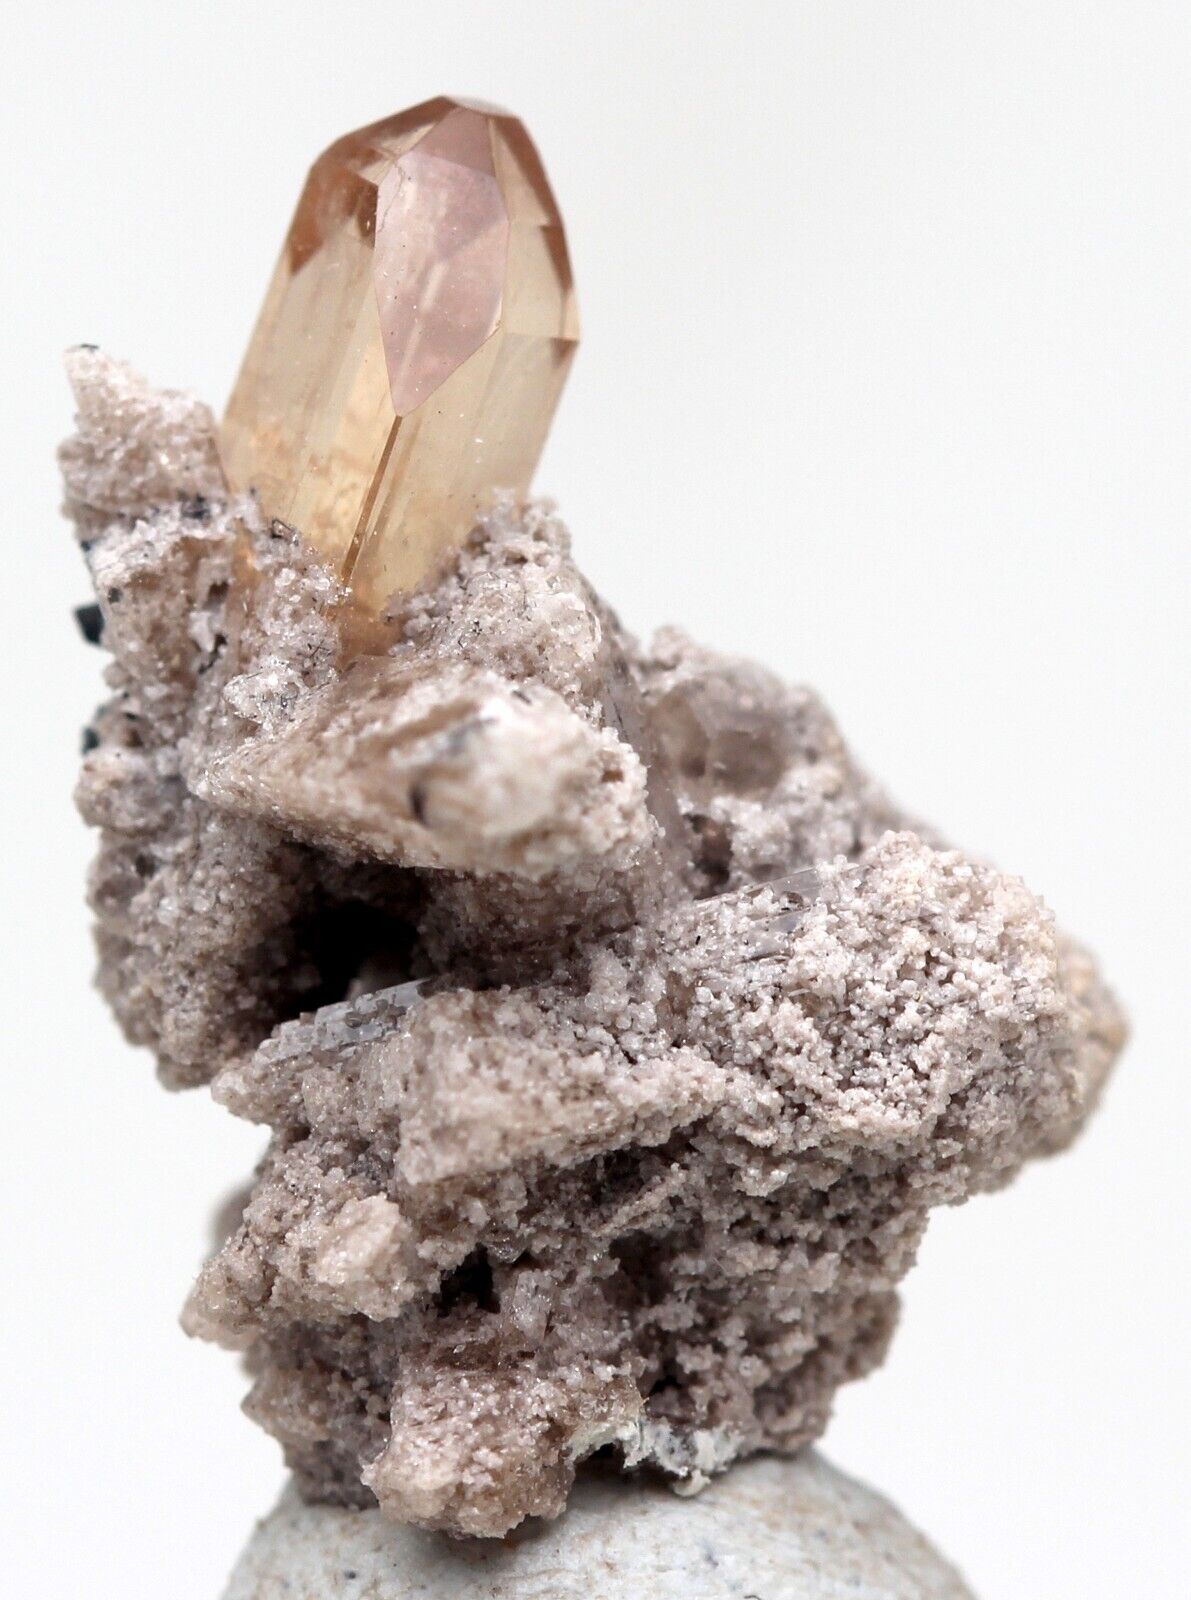 CHAMPAGNE IMPERIAL TOPAZ Crystal Cluster Mineral Specimen JUAB COUNTY UTAH